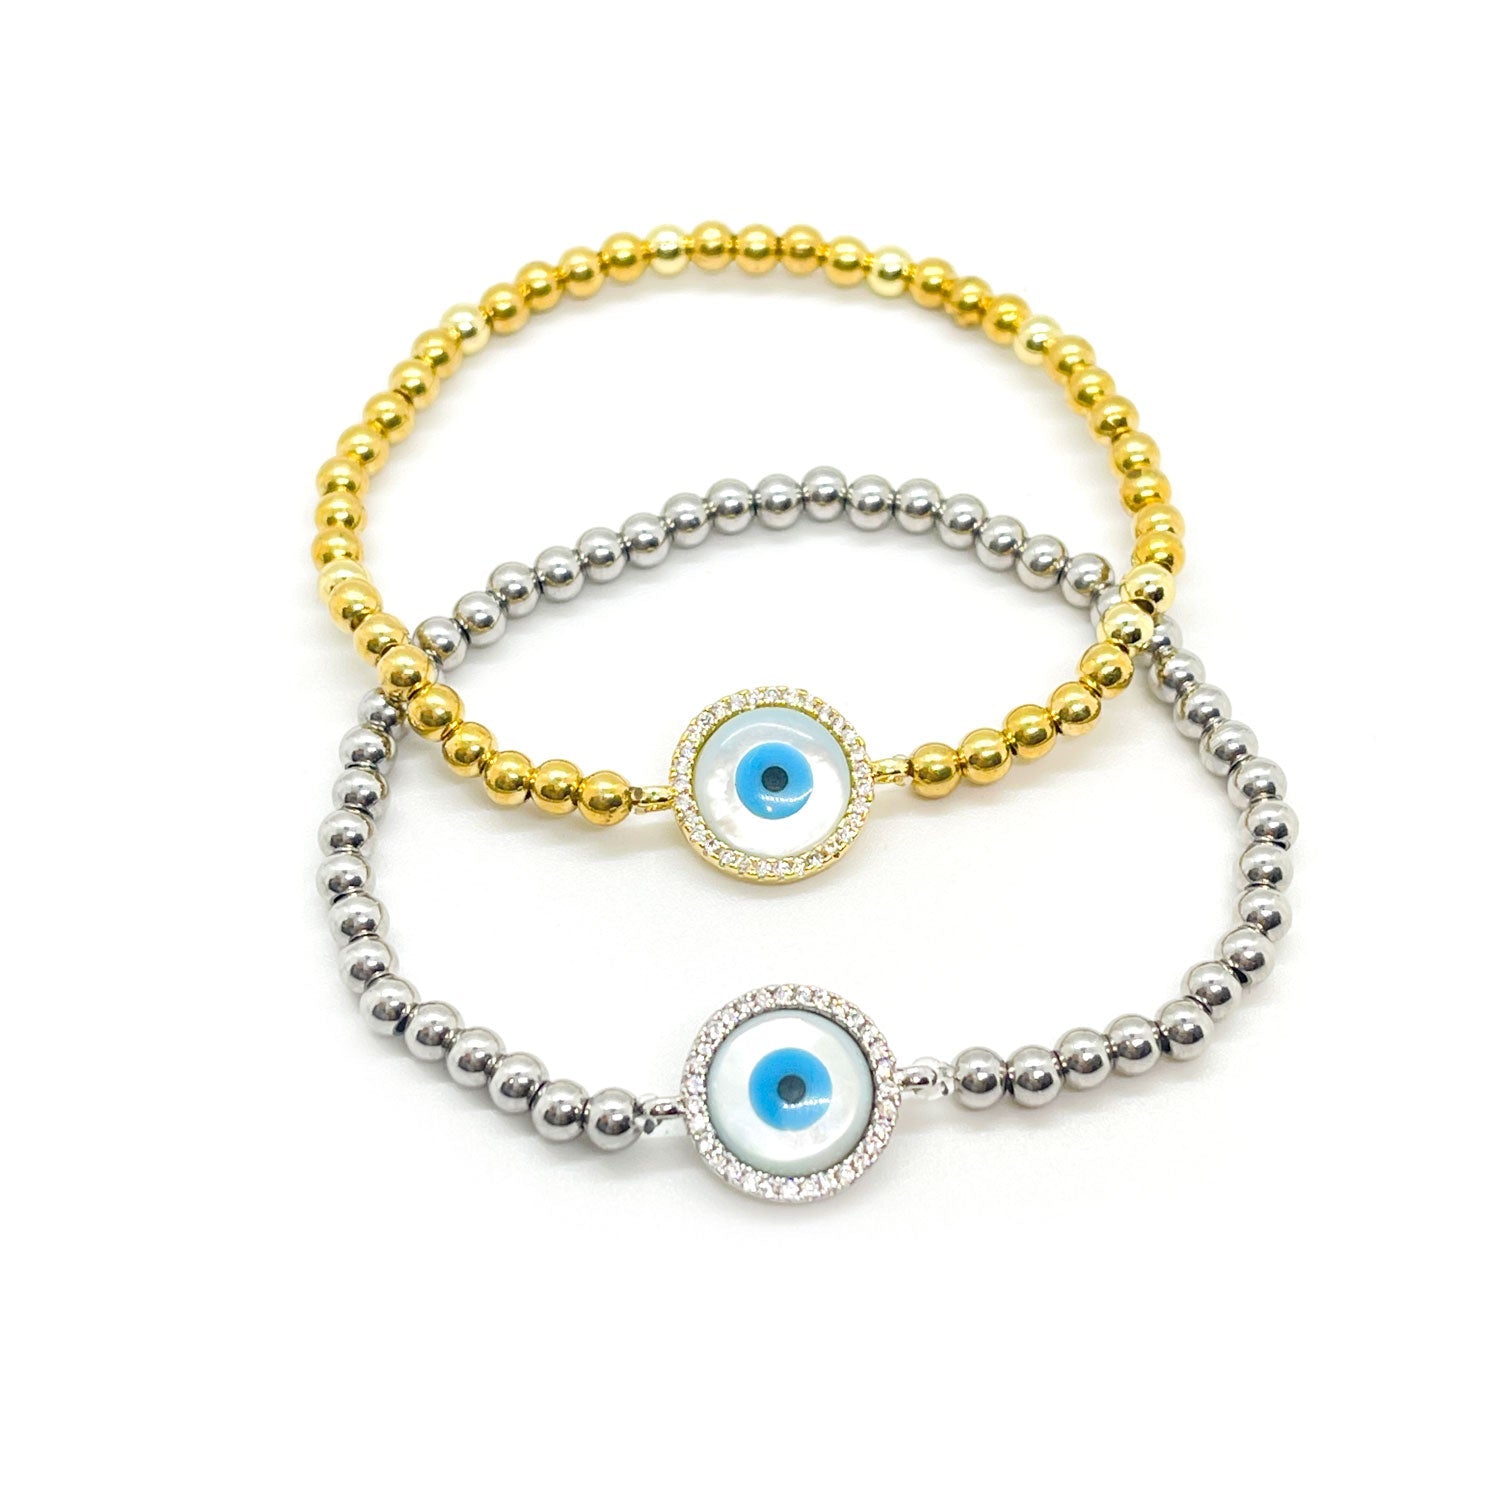 Dainty Circular Eye Charm Beads Bracelet